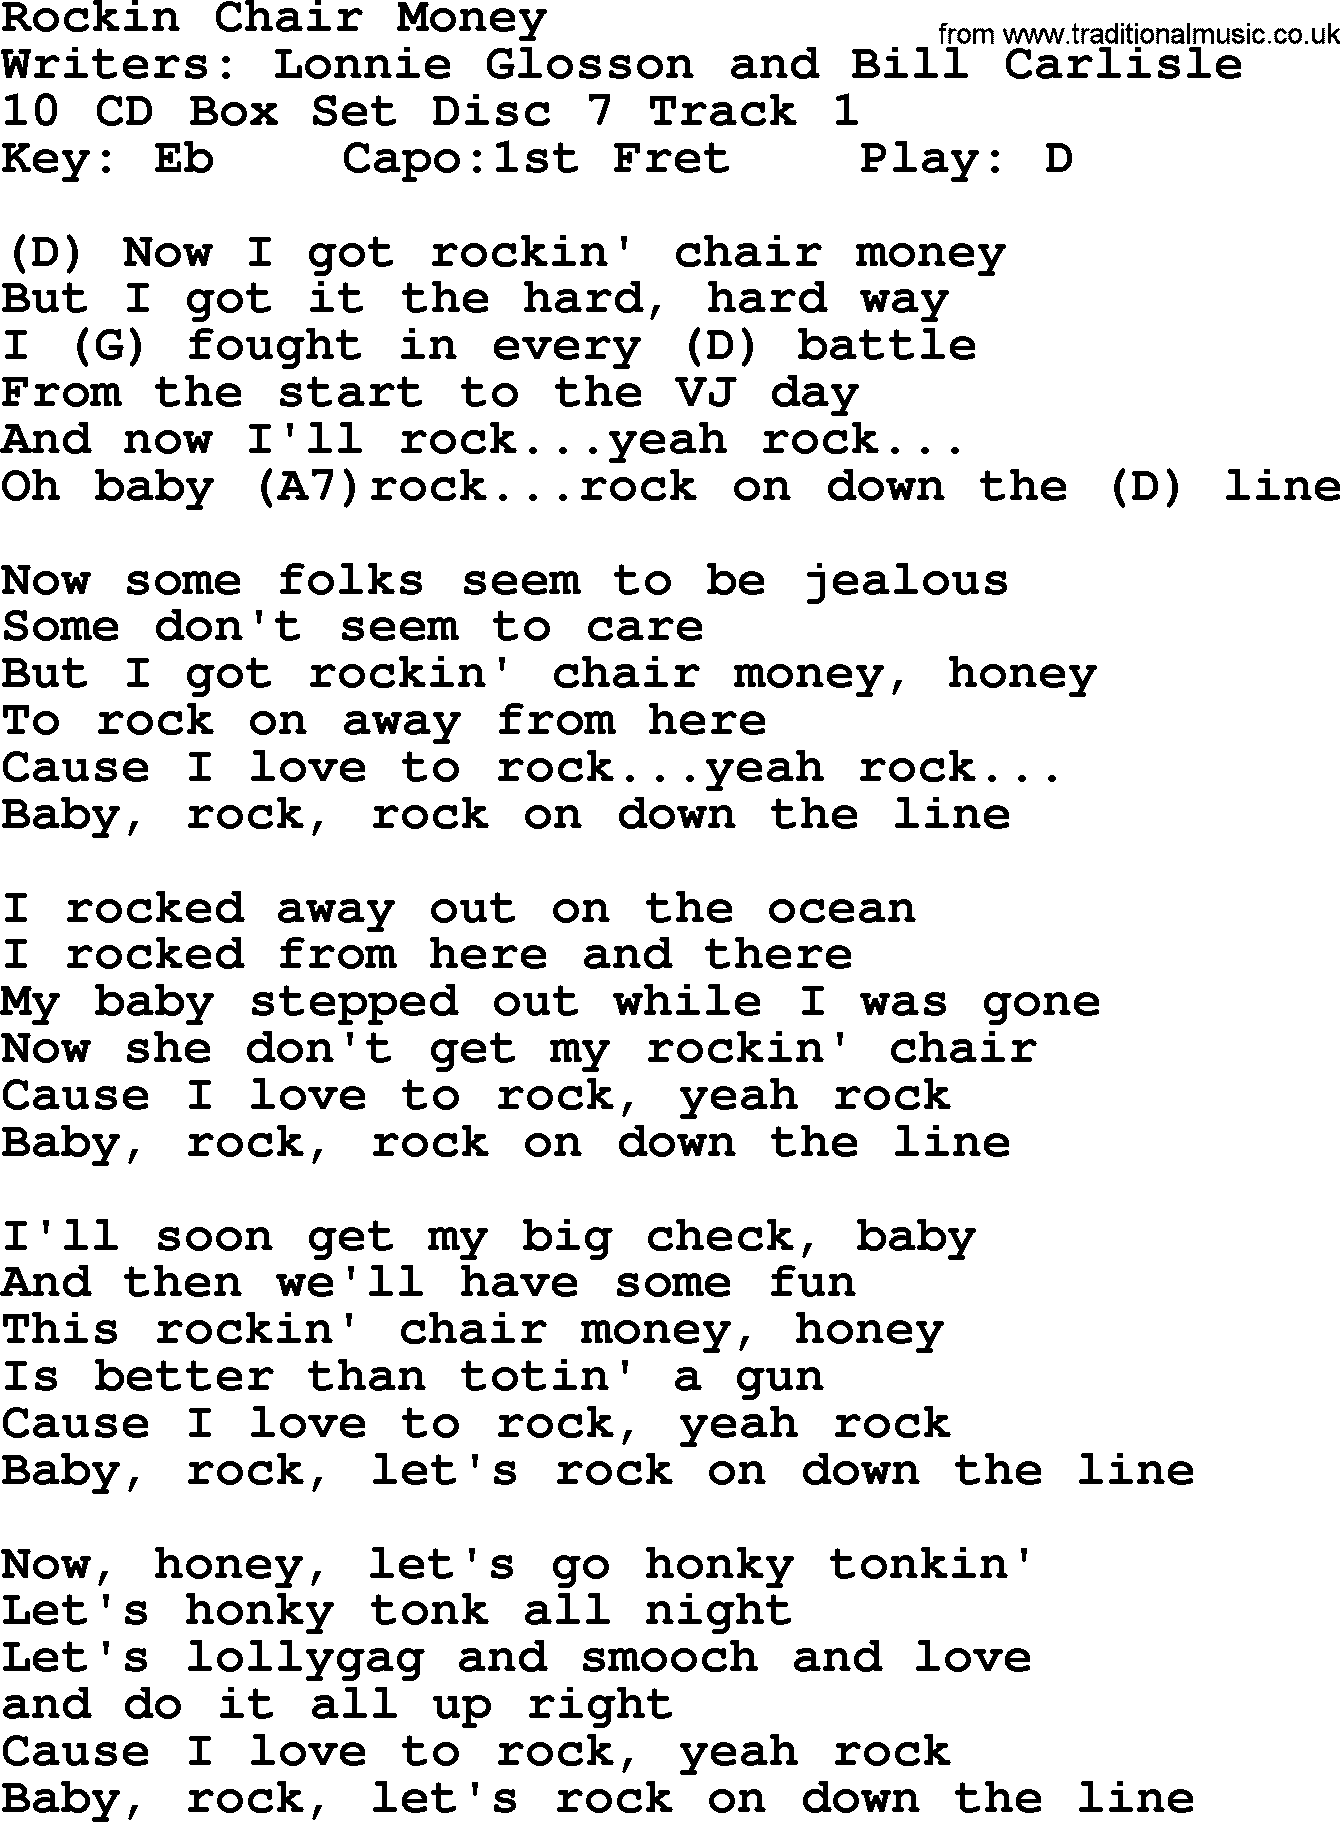 Hank Williams song Rockin Chair Money, lyrics and chords